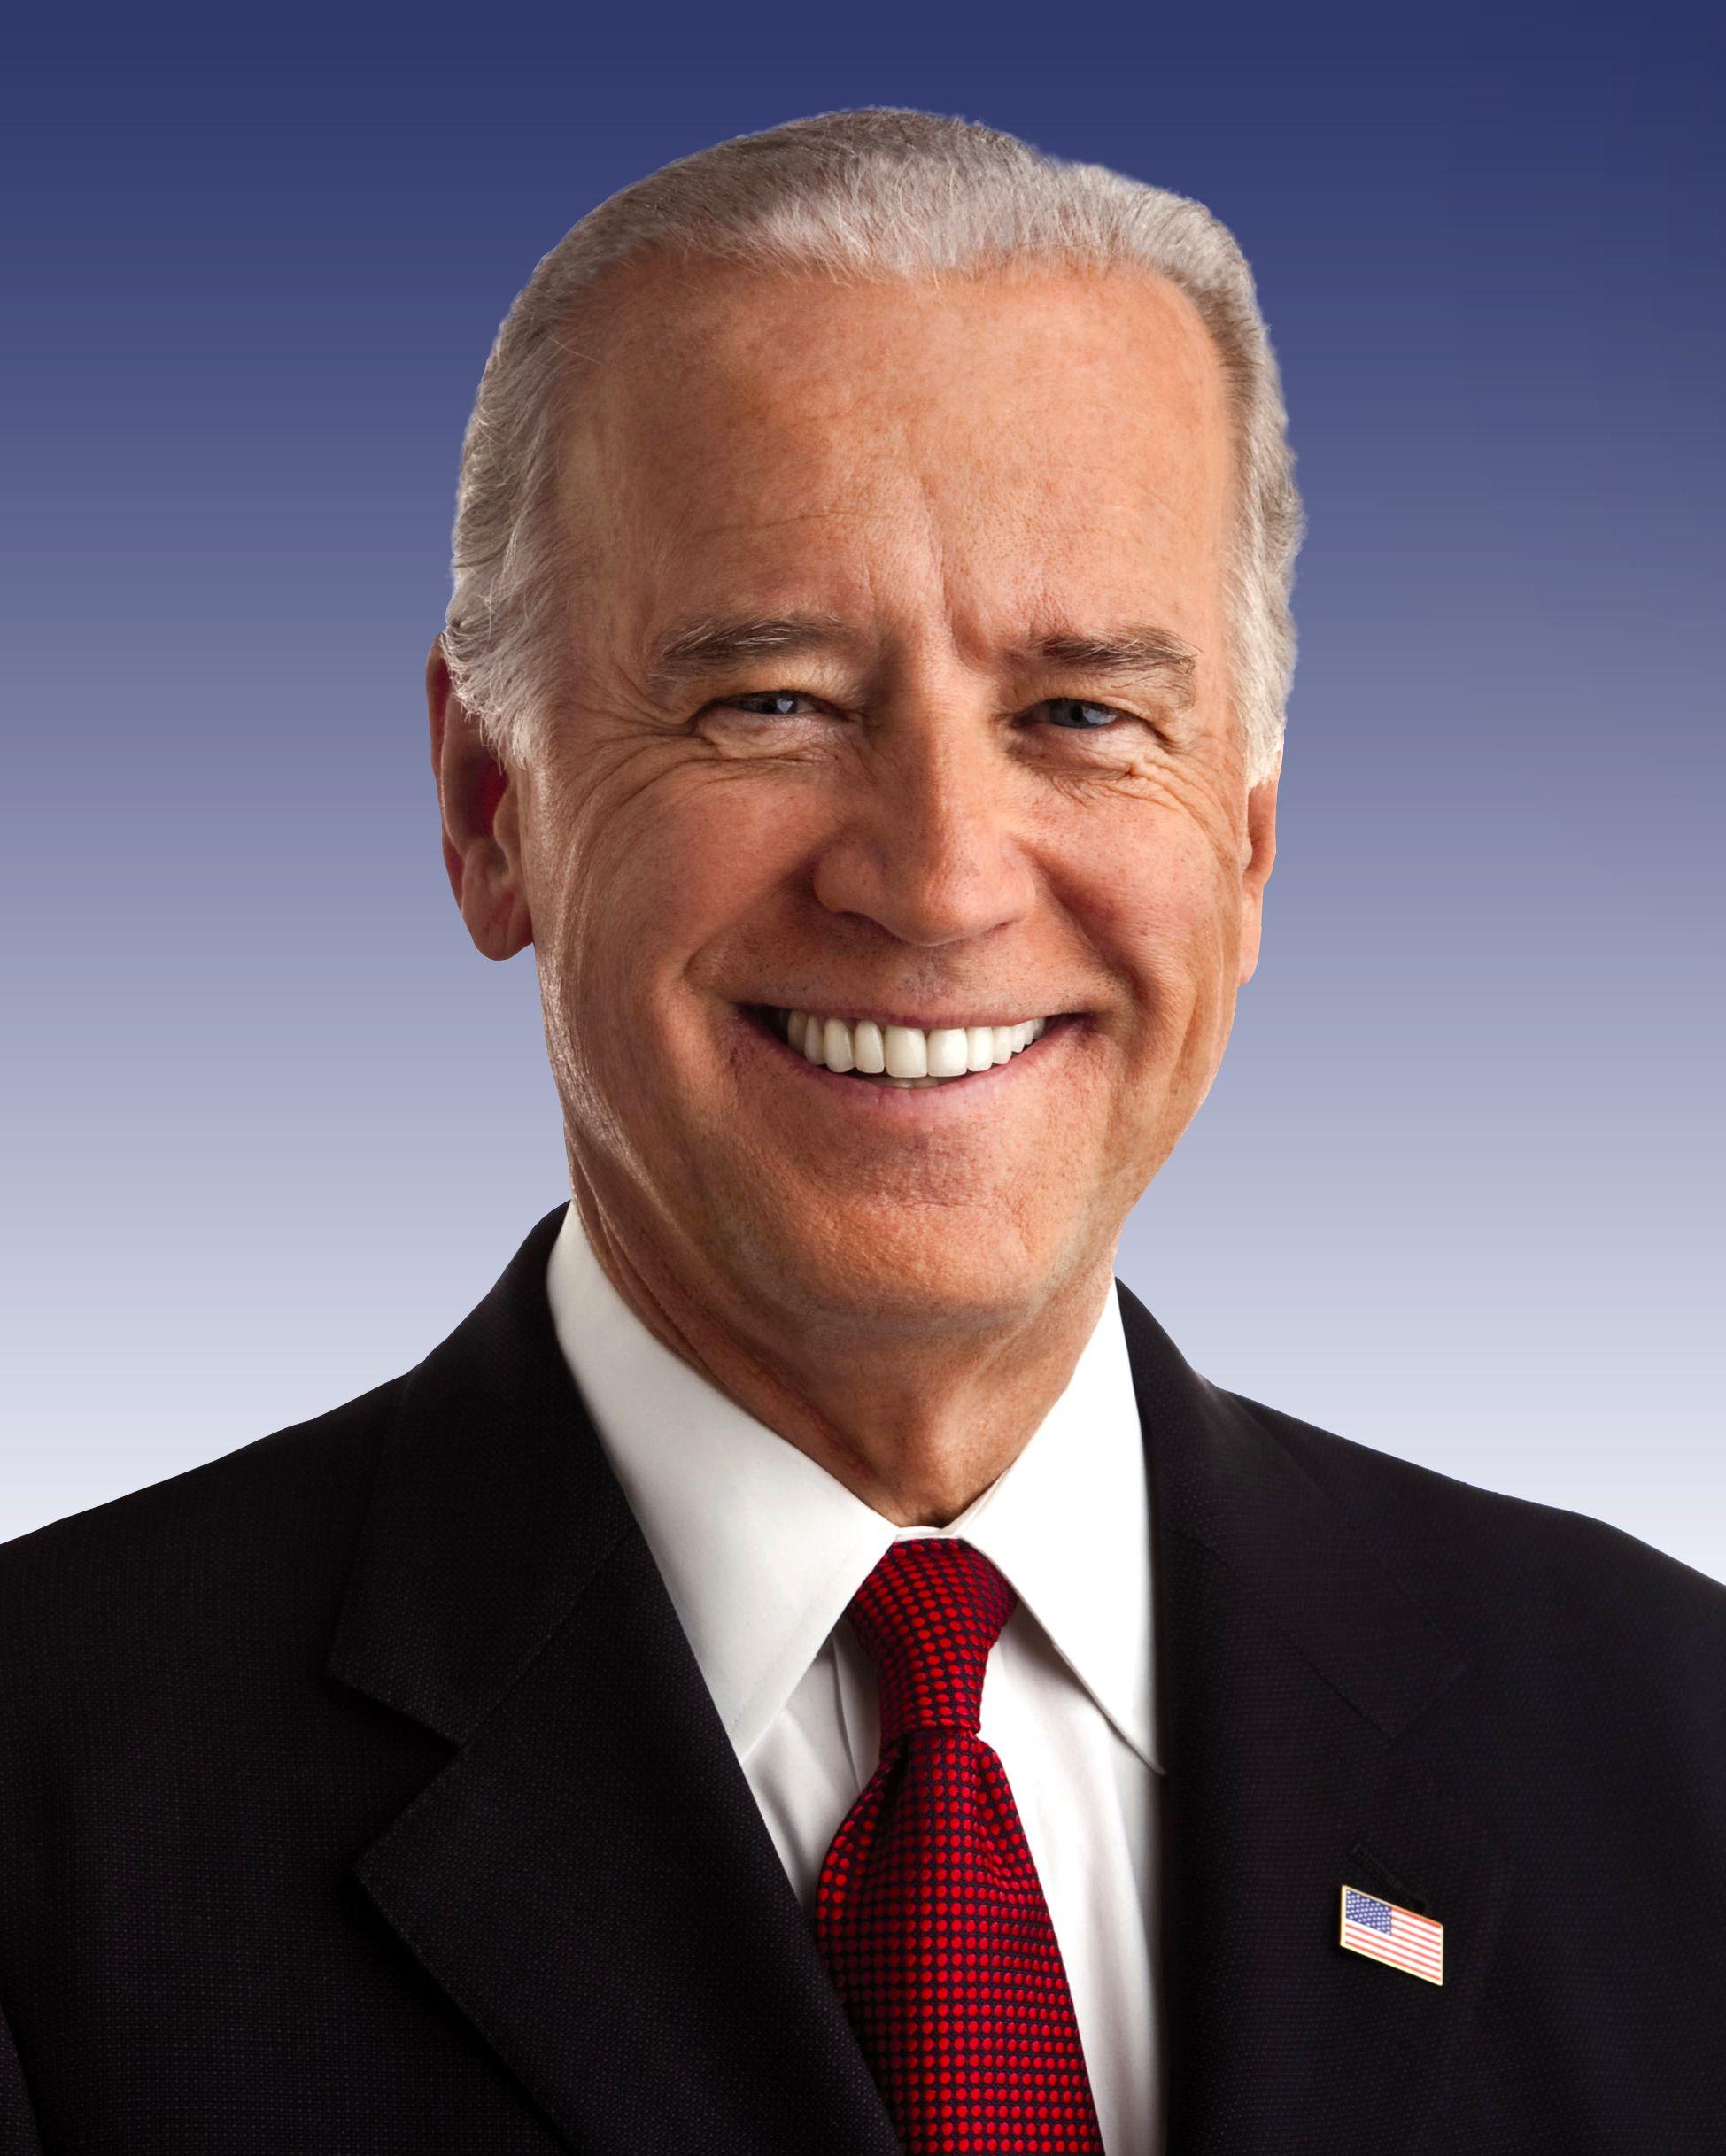 Top Unknon Fact About Joe Biden